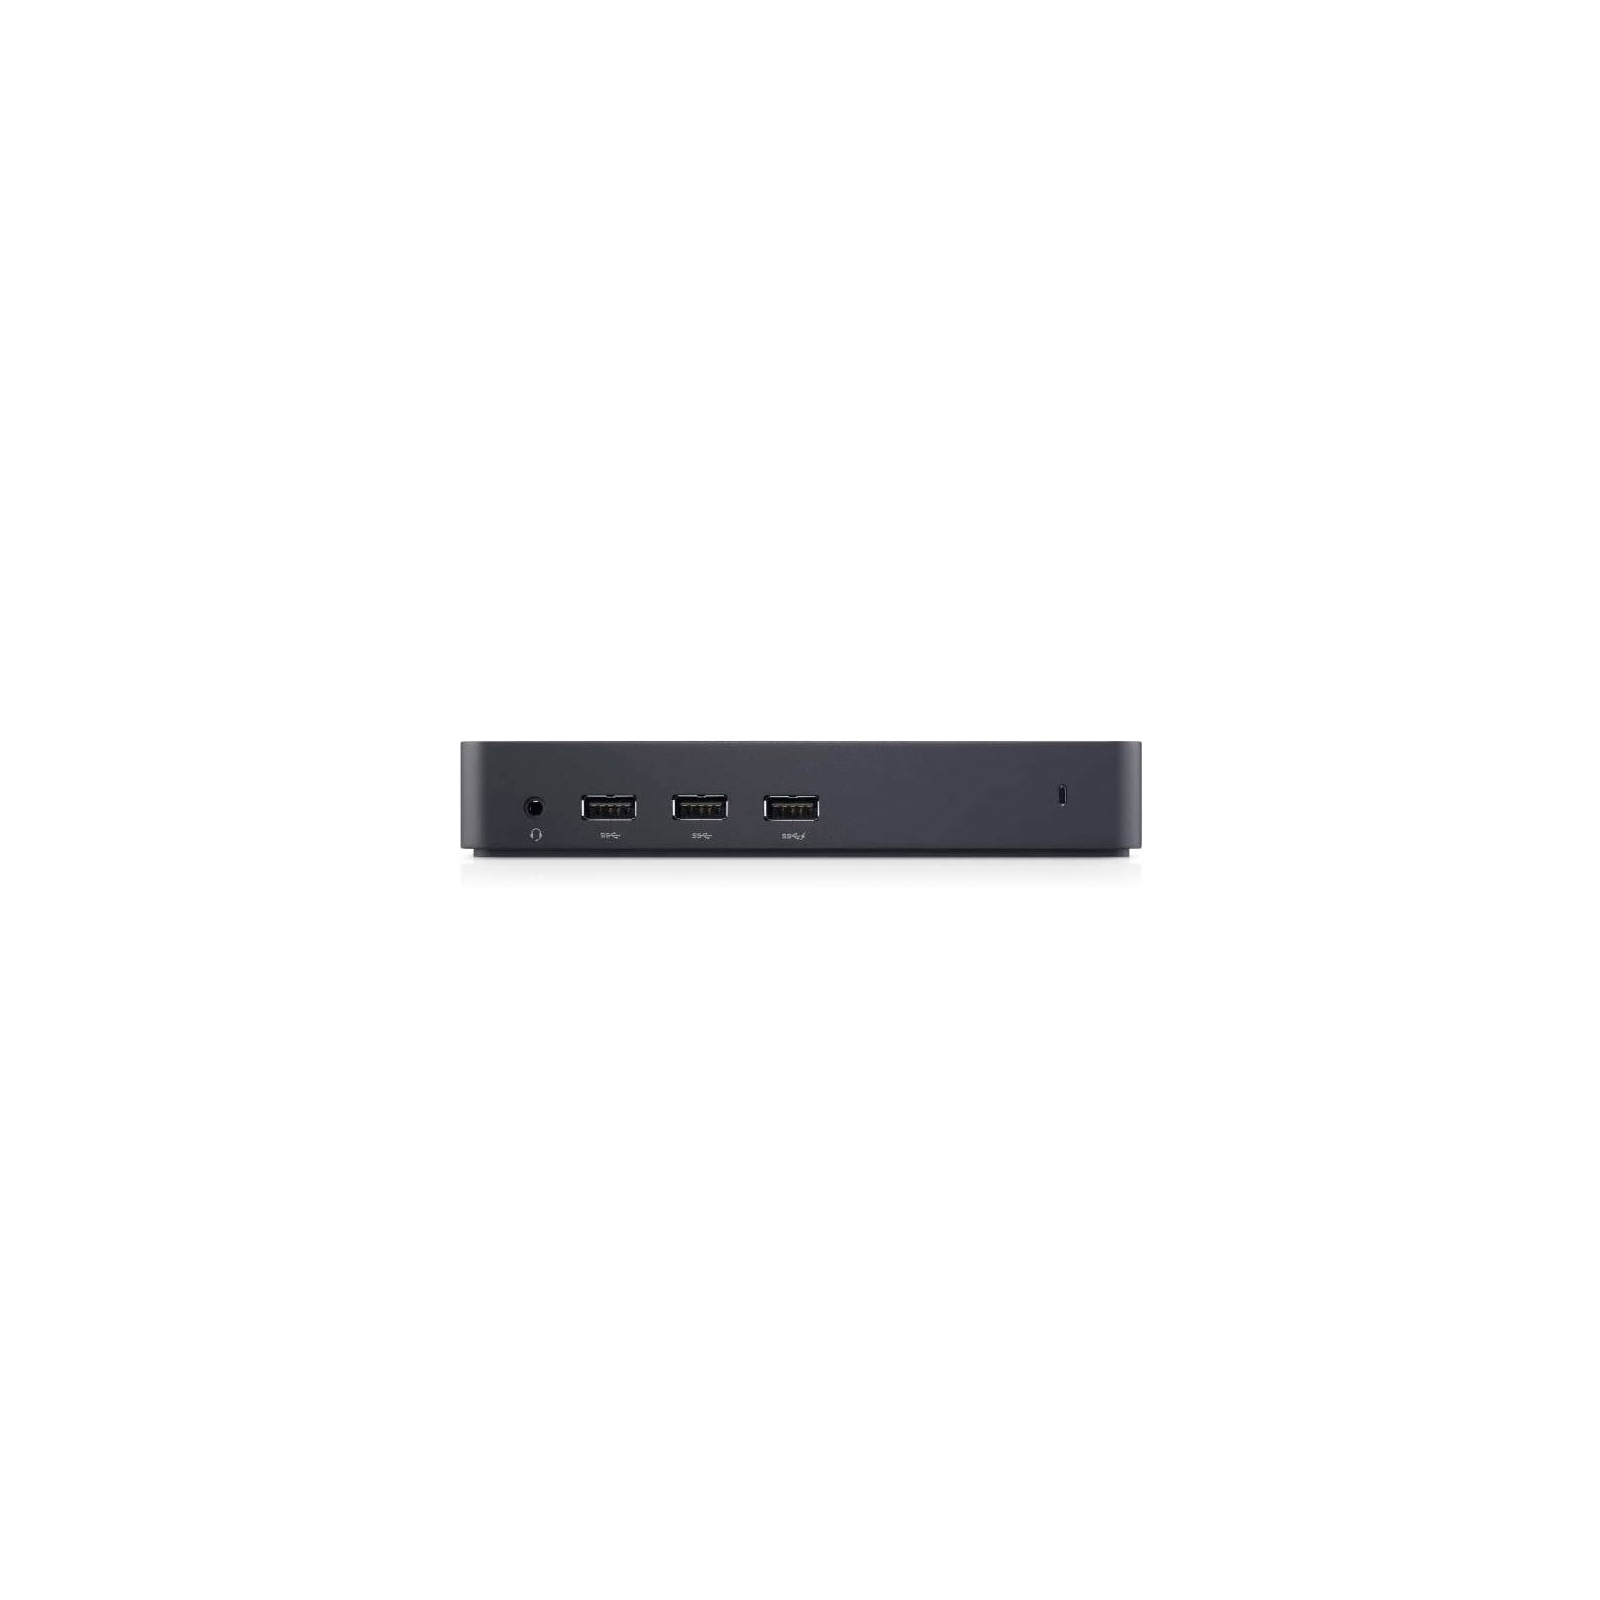 Порт-репликатор Dell USB 3.0 Ultra HD Triple Video Docking Station D3100 EUR (452-BBOT)